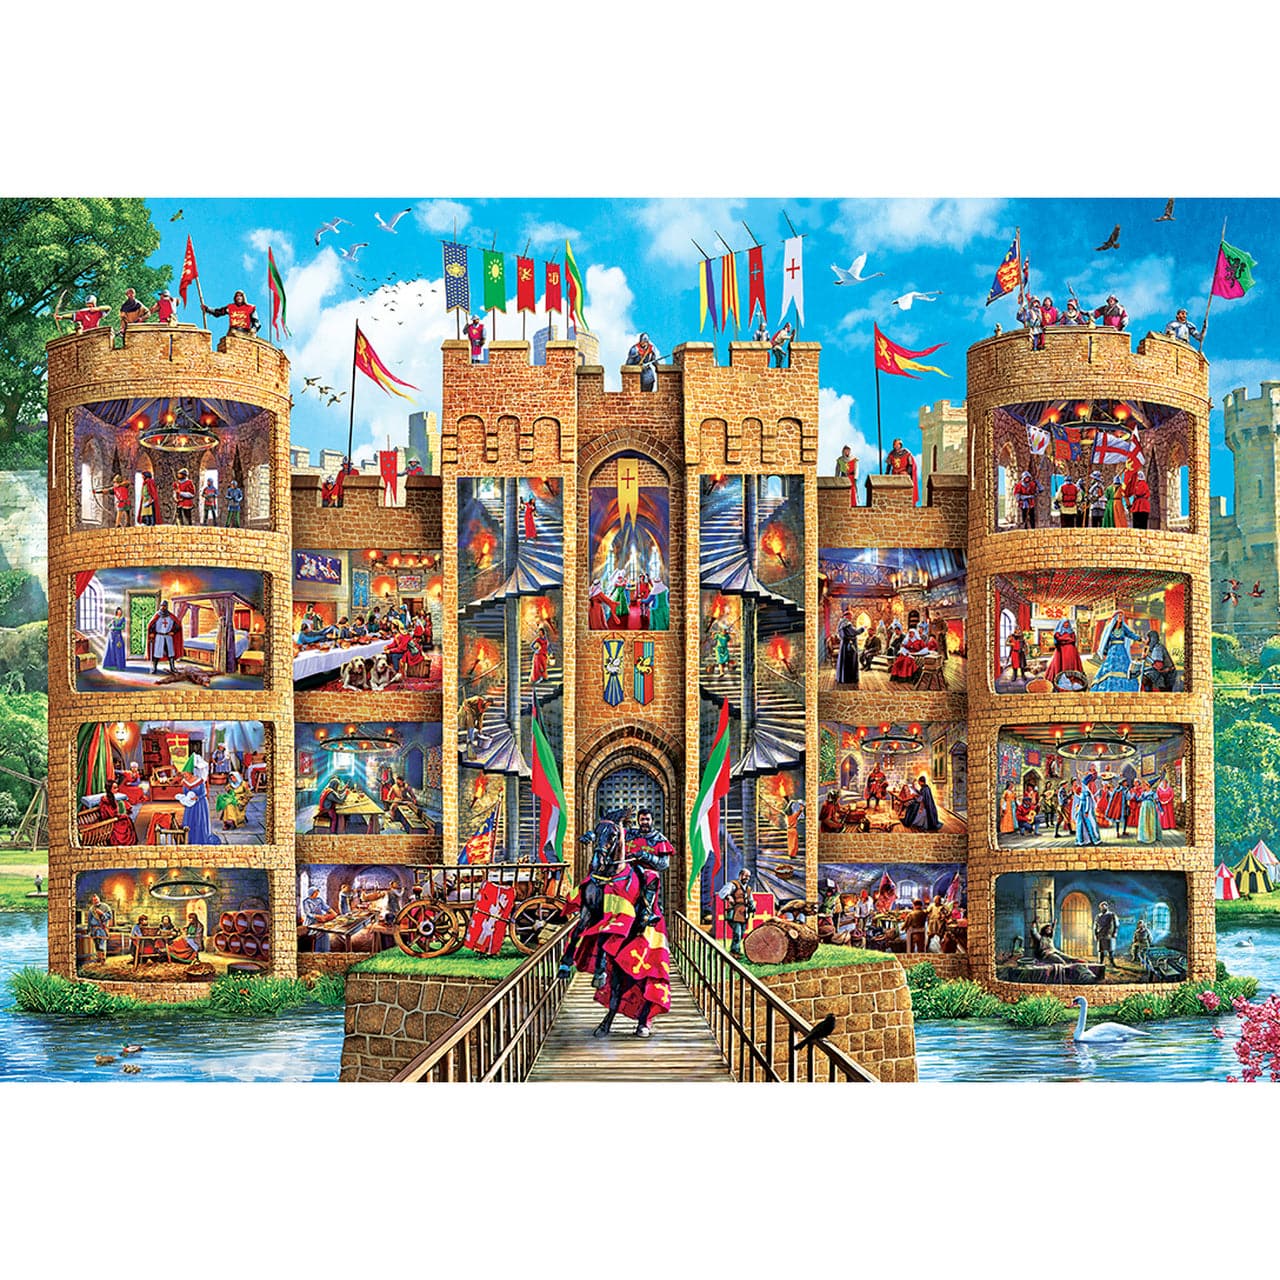 MasterPieces-Cutaways - Medieval Castle - 1000 Piece EZGrip Puzzle-71964-Legacy Toys